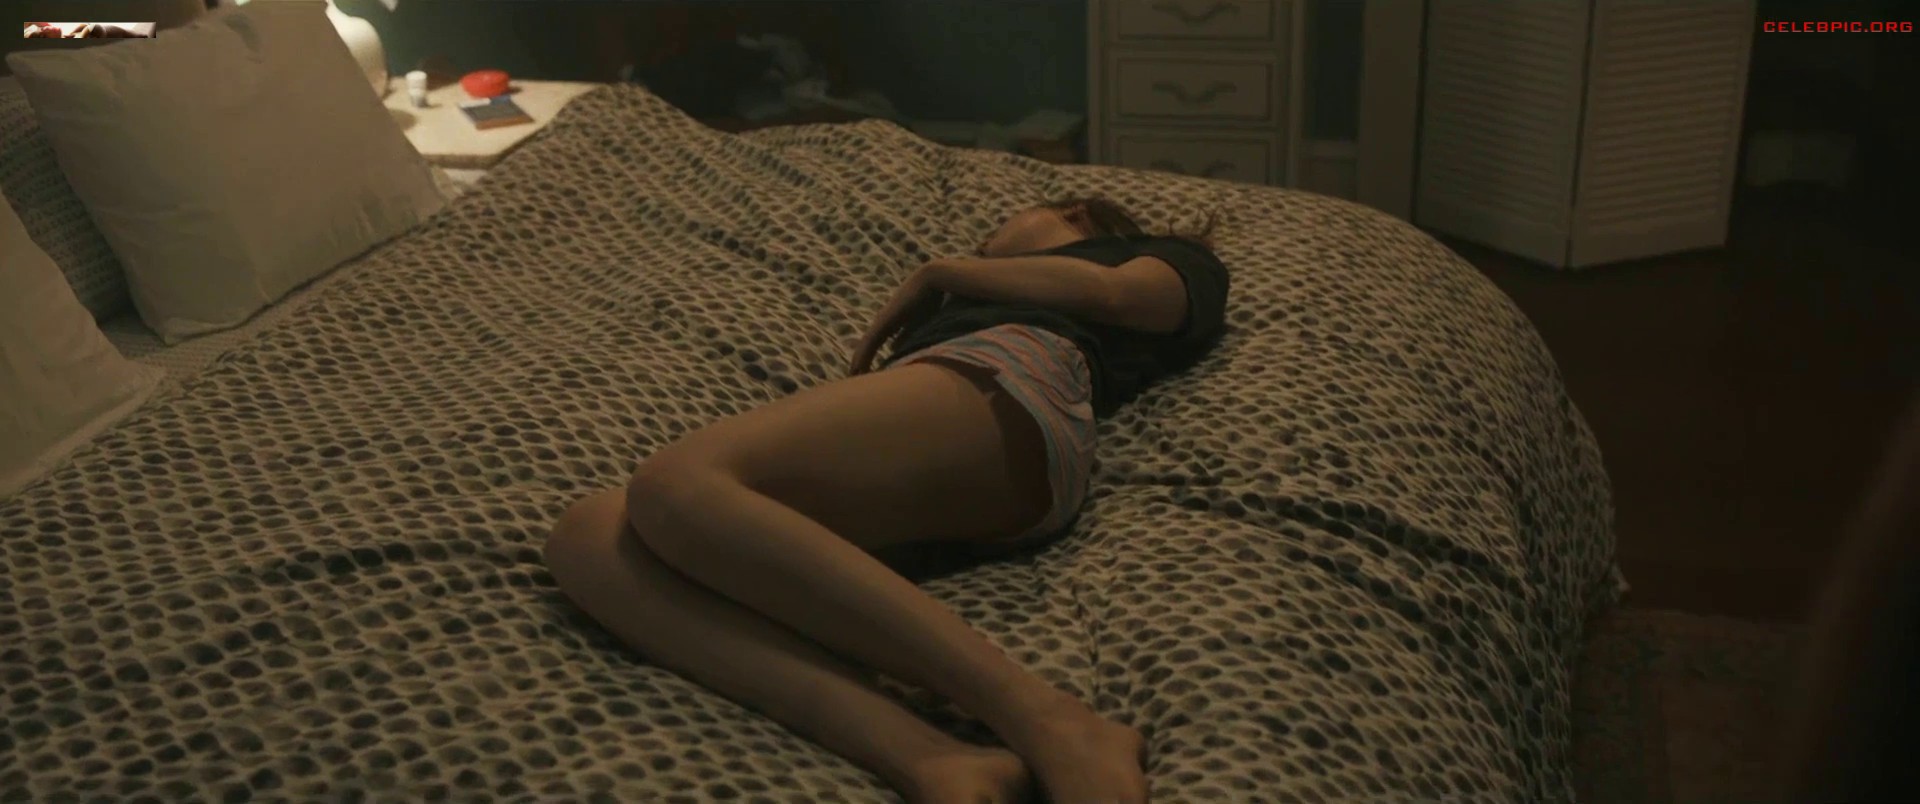 Dakota Johnson - Wounds 1080p (1)315.jpg